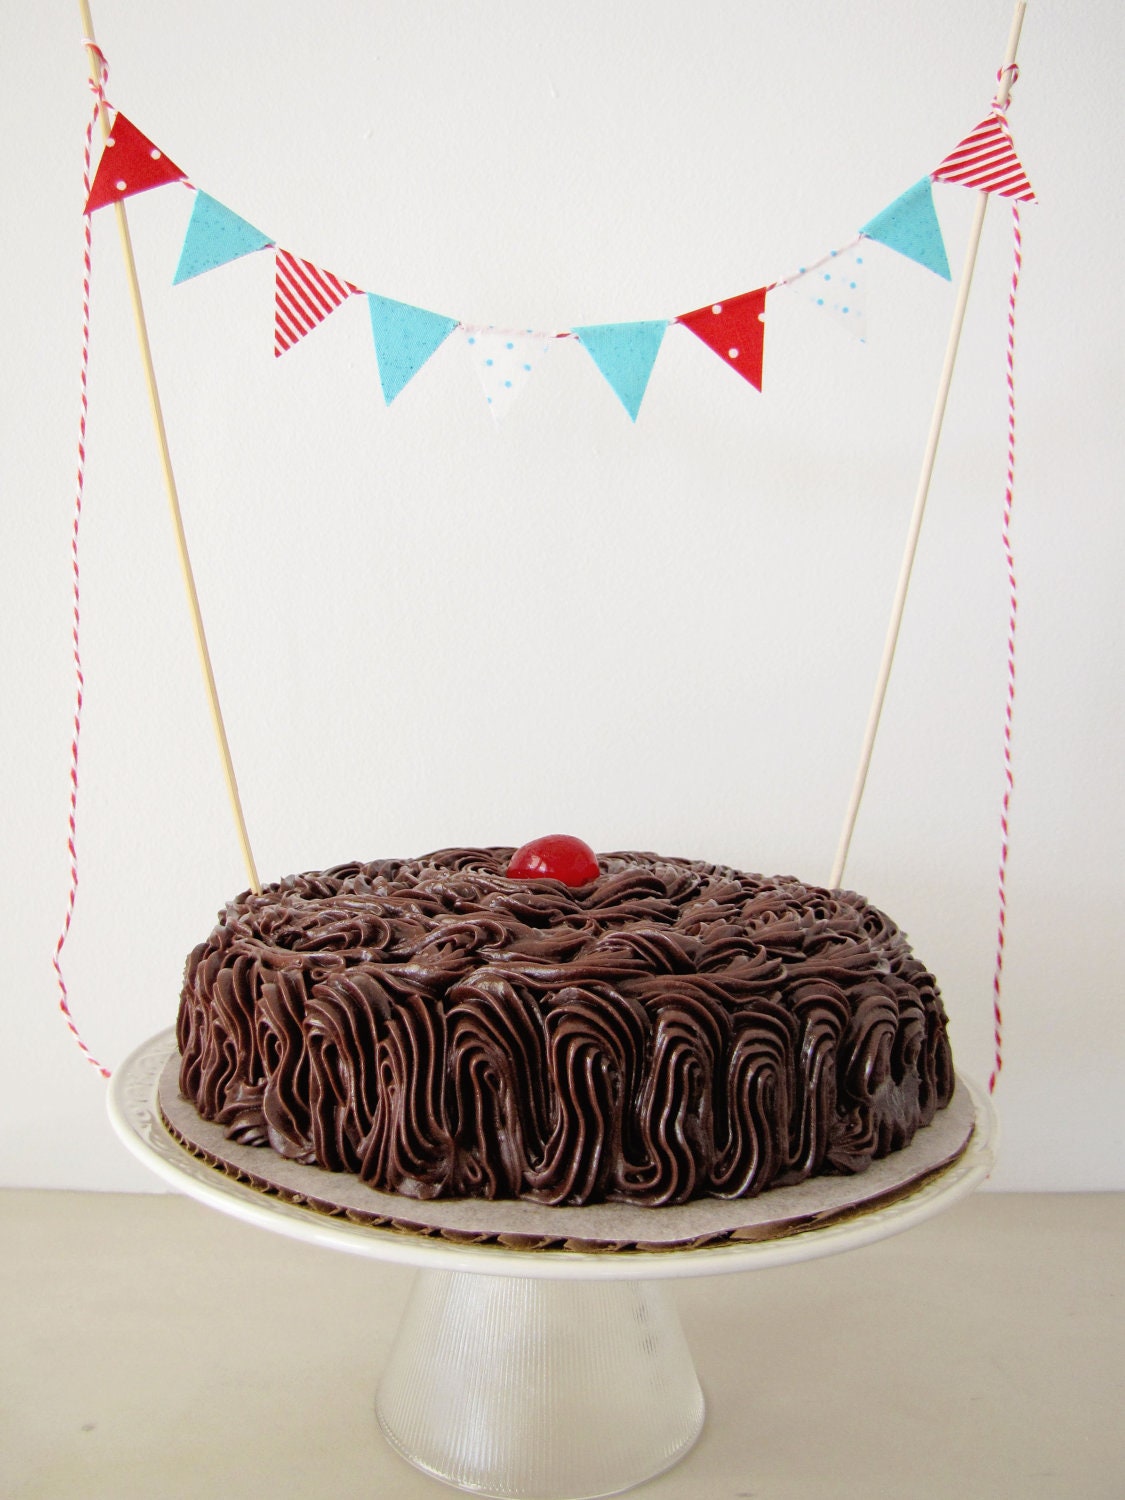 Fabric Cake Bunting Decoration - Cake Topper - Wedding, Birthday Party, Shower Decor "Winter Wonderland" red, turquoise sparkle, polka dot